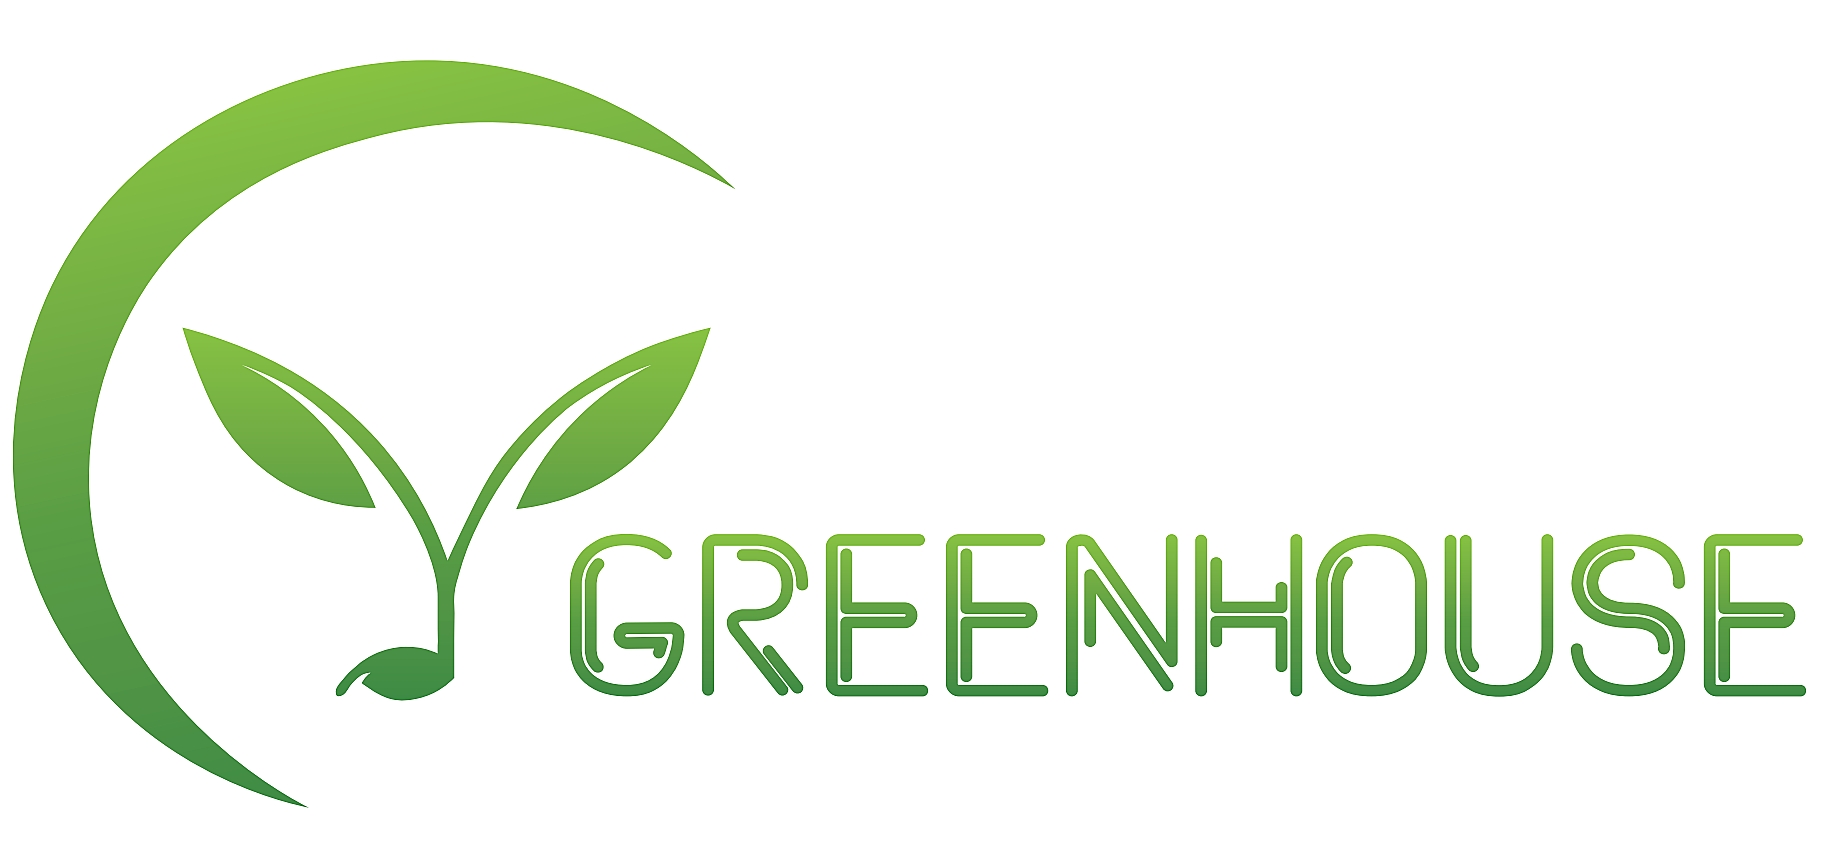 high-tech greenhouse